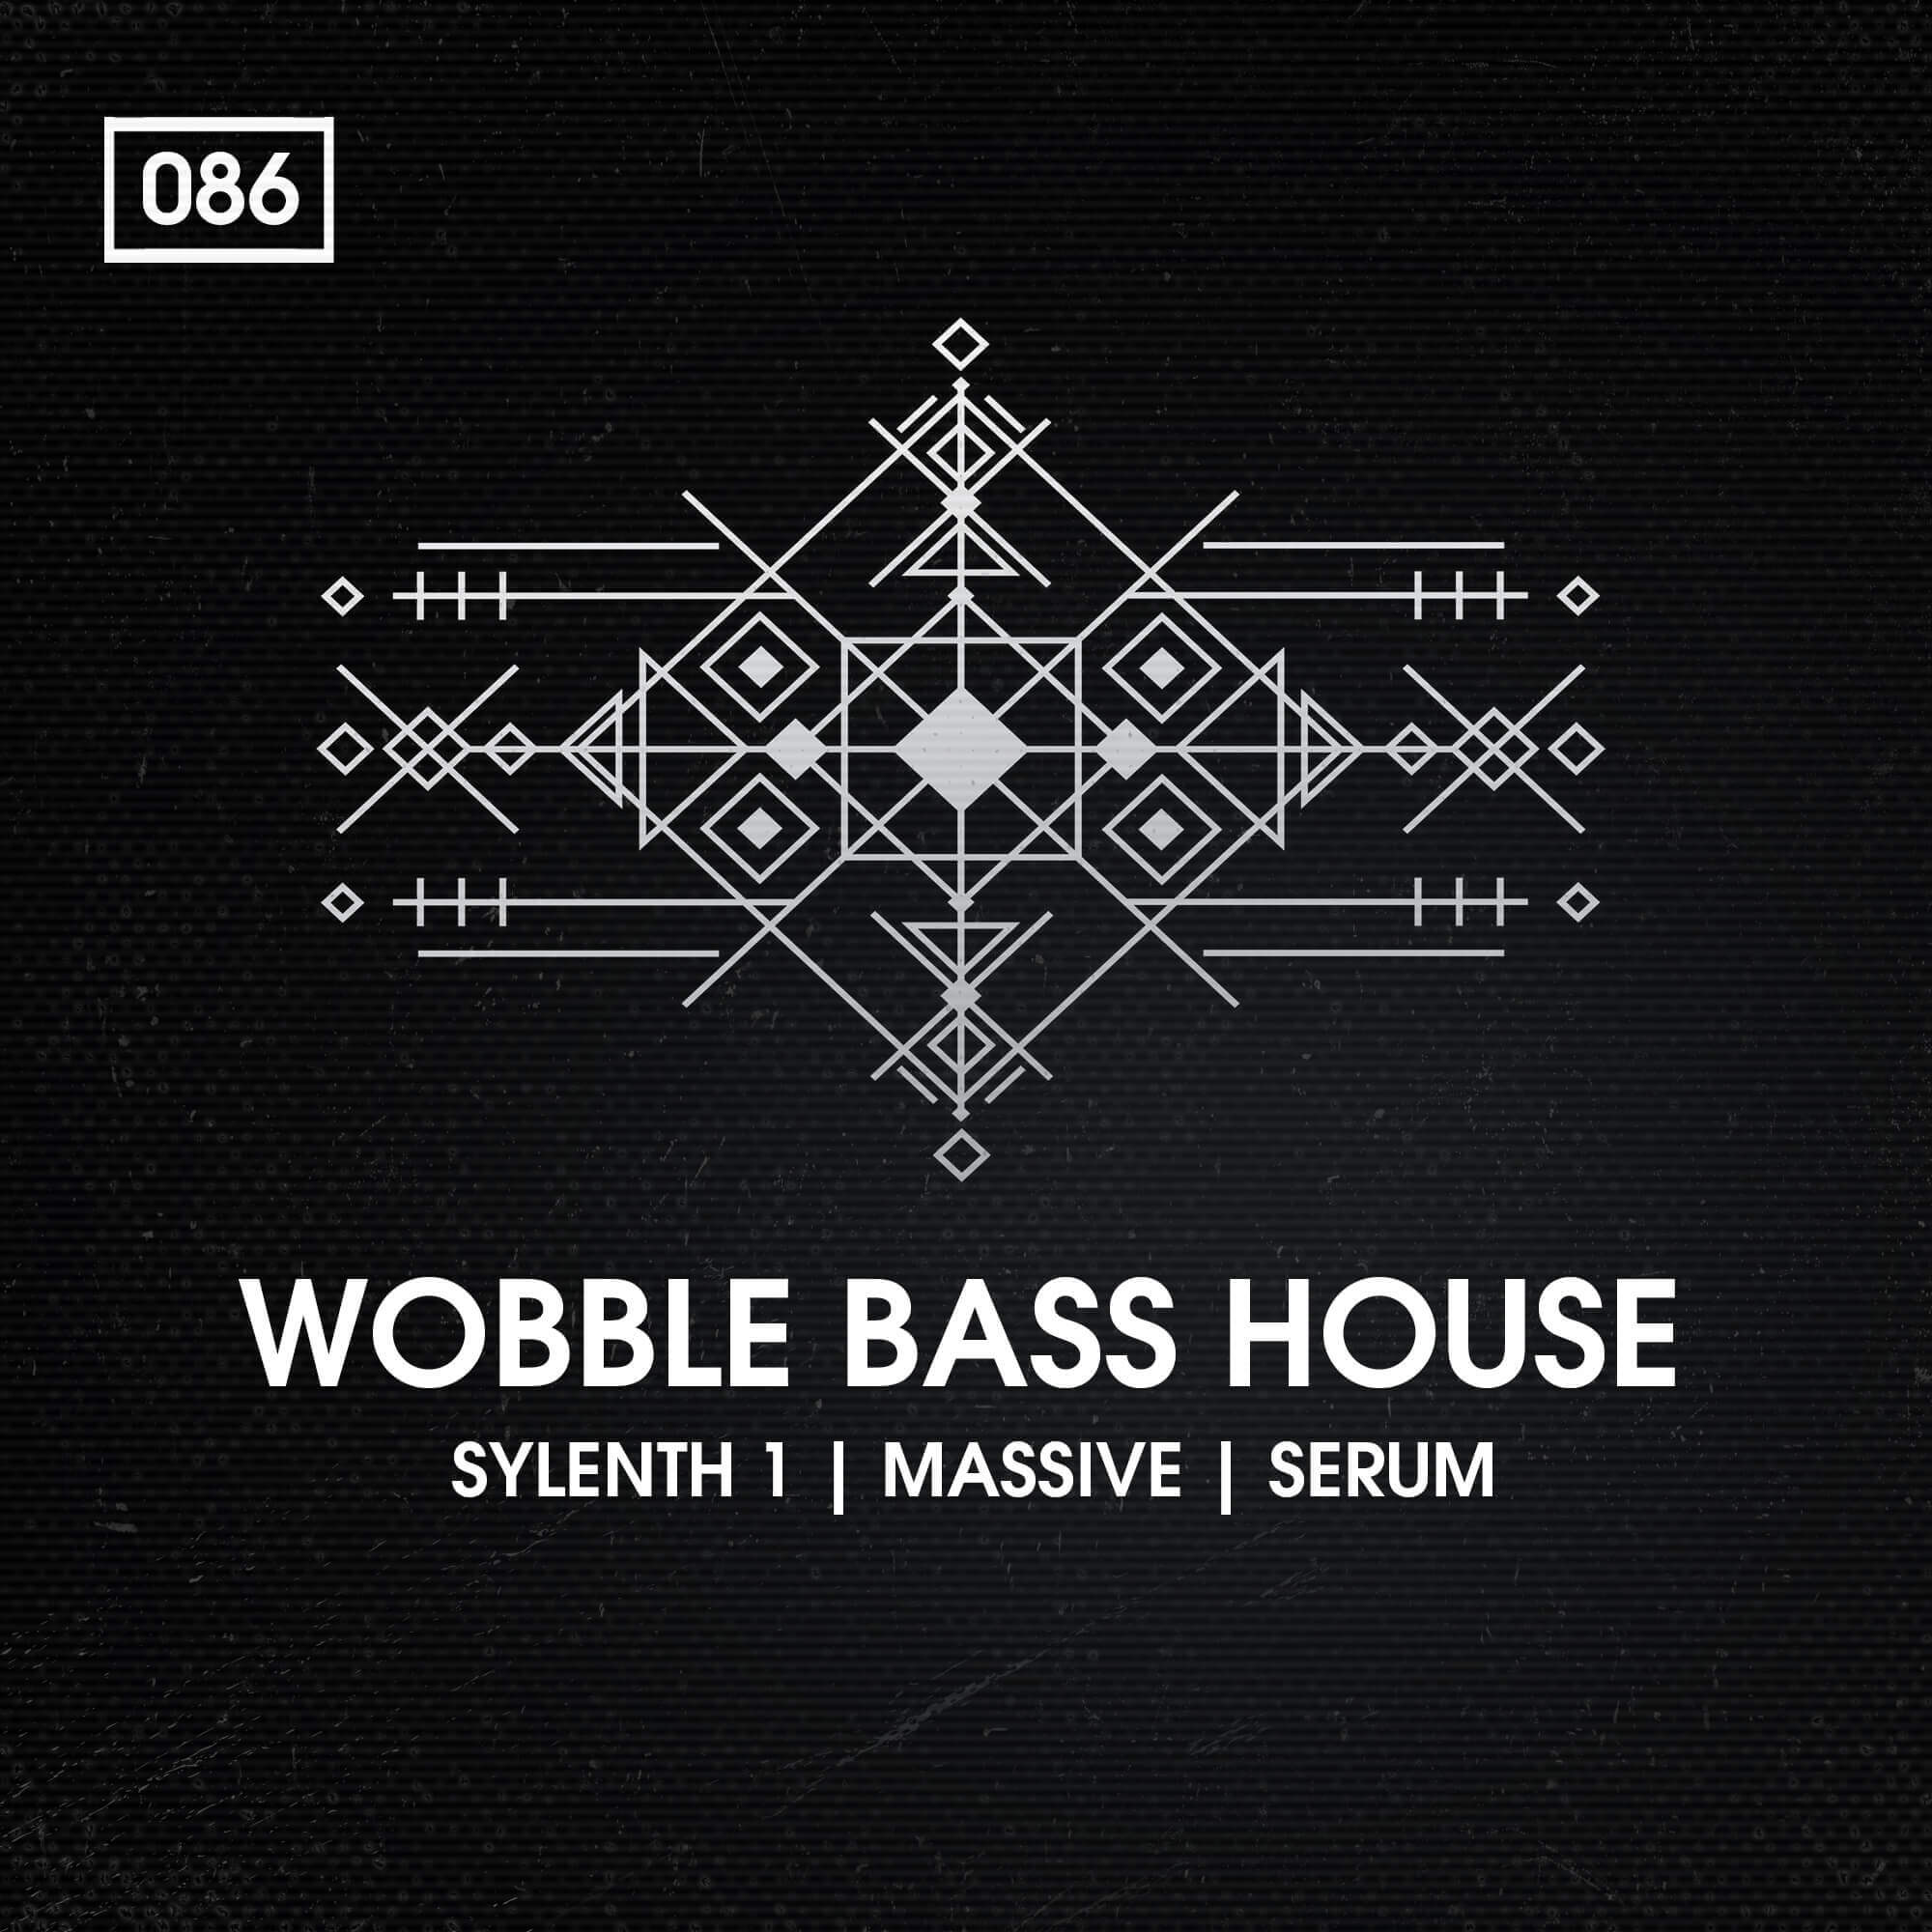 Wobble-Bass-House-1-1.jpg